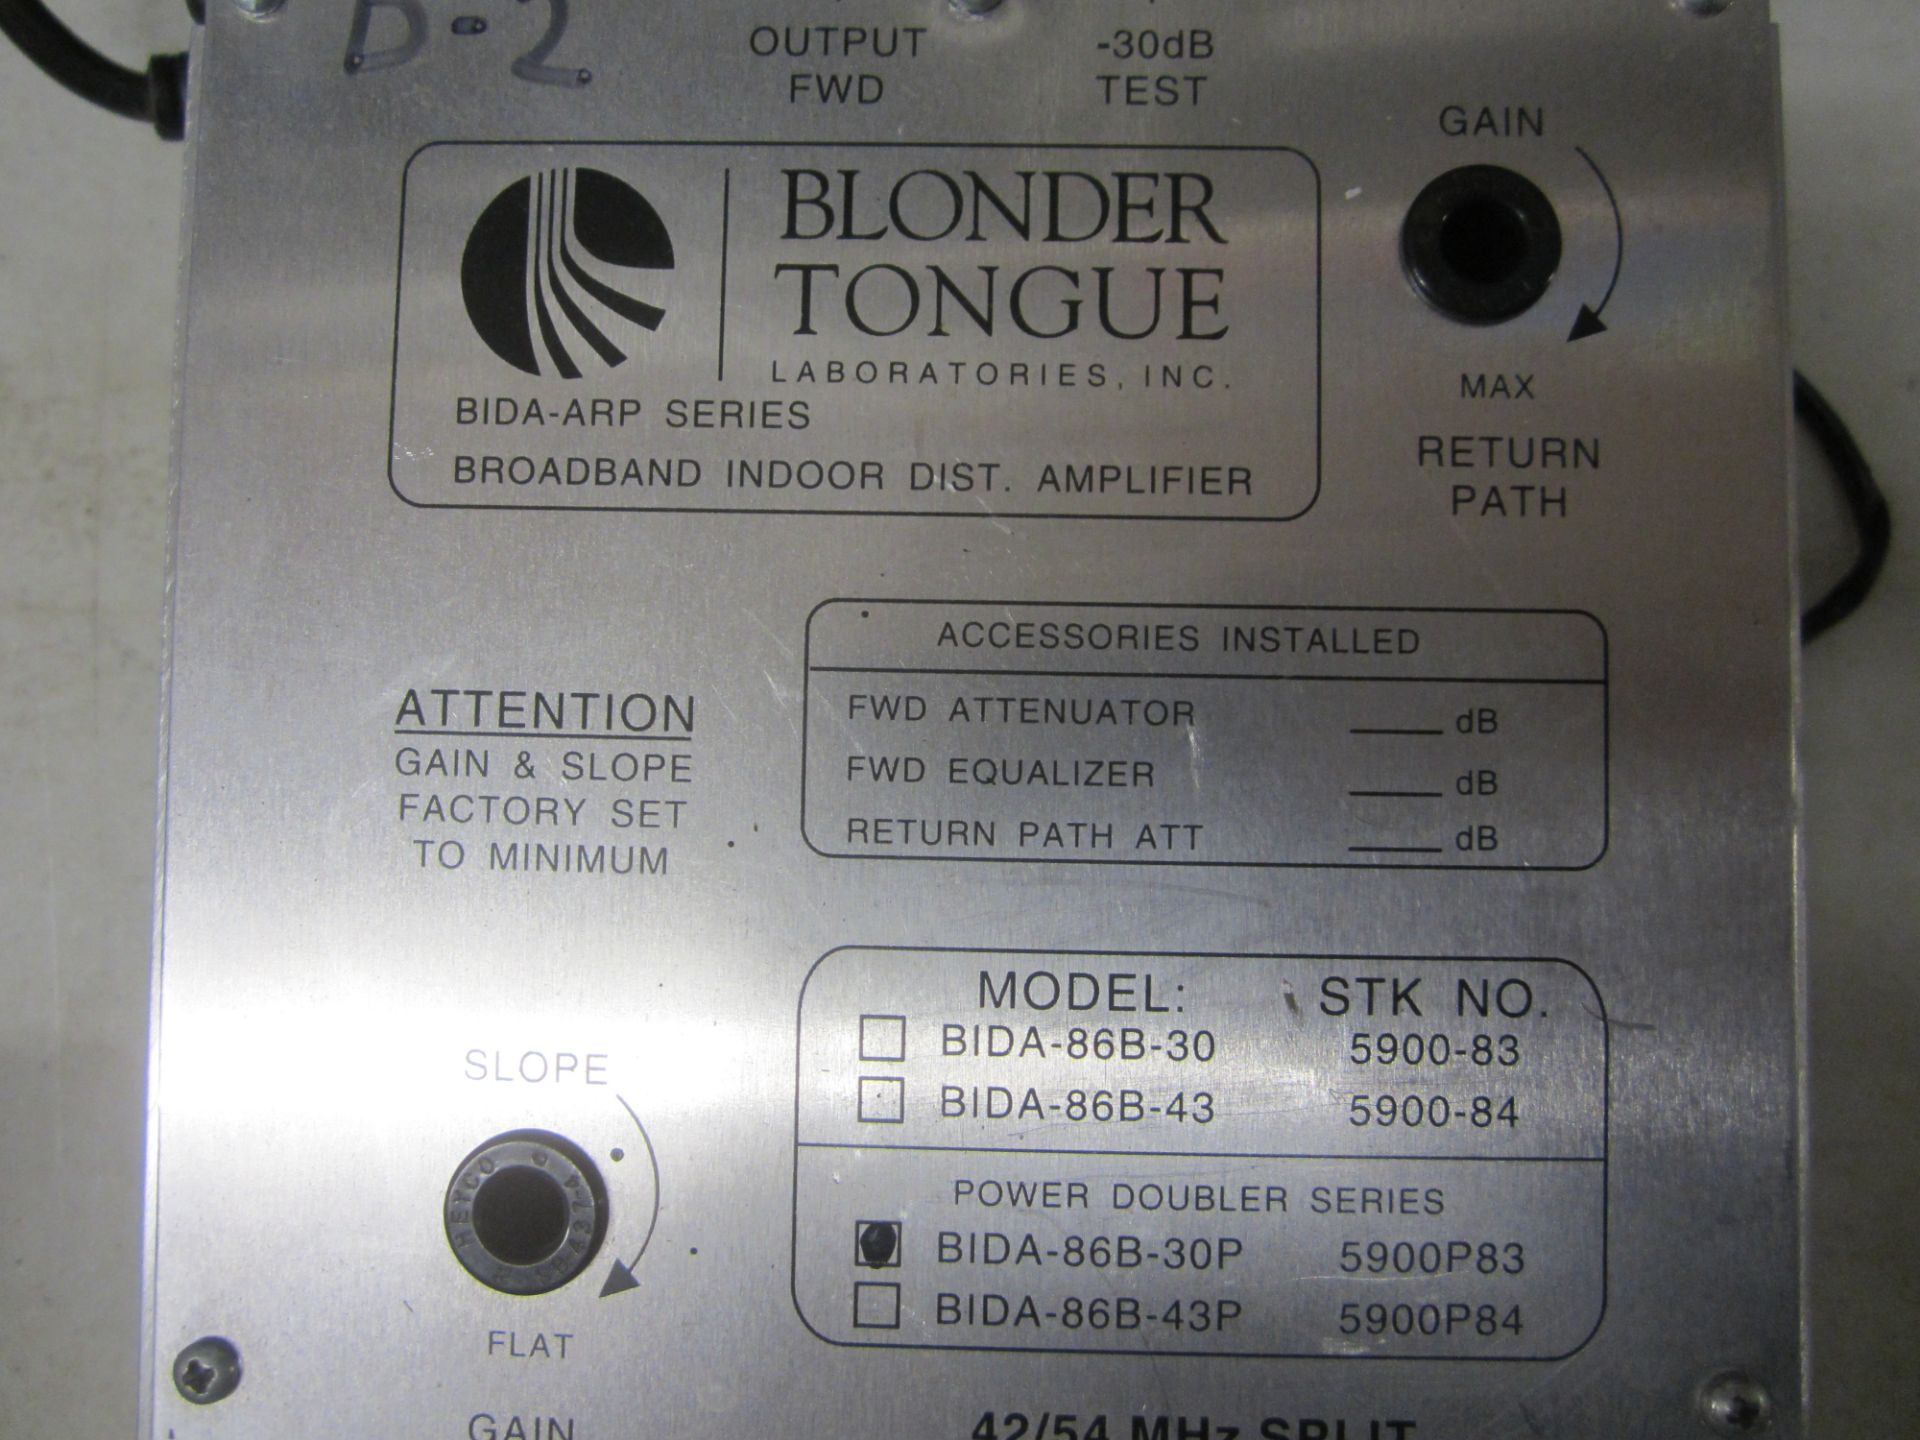 Lambda LA-200 DC Power Supply and Blonder Tongue BIDA-86B-30P Power Doubler - Image 3 of 3